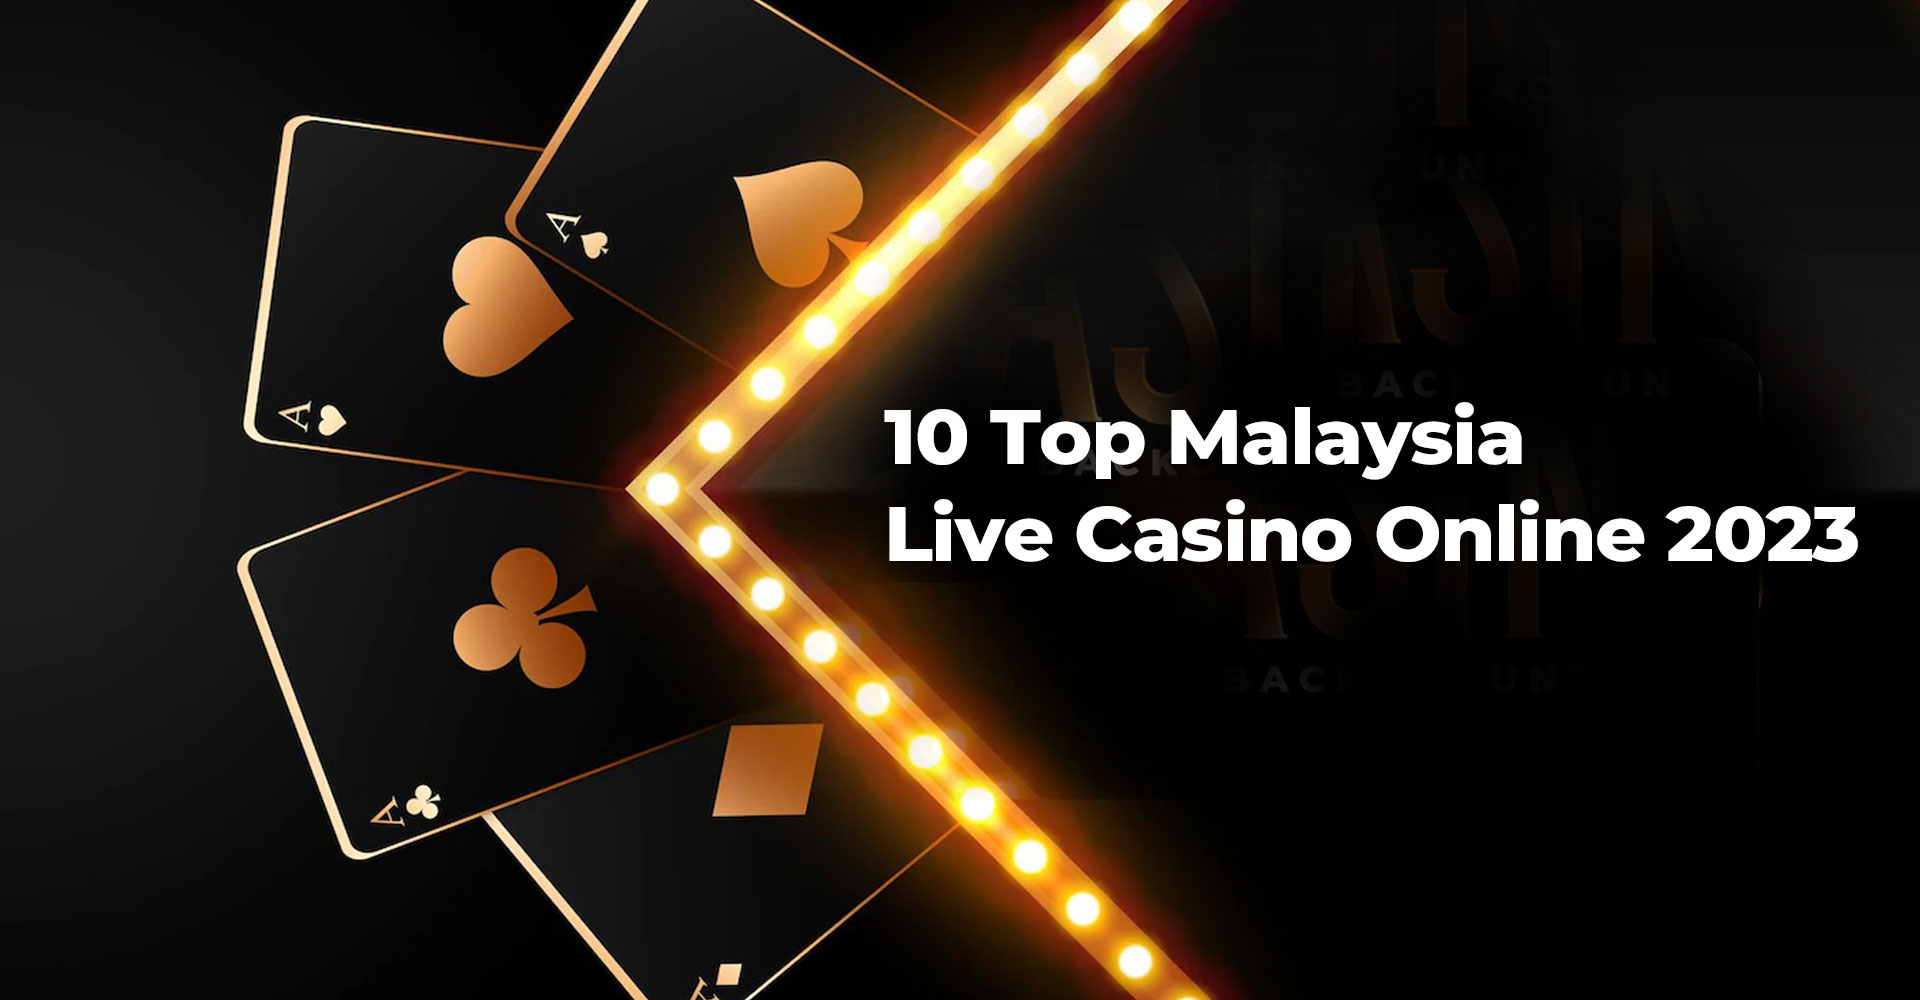 10 Top Malaysia Live Casino Online 2023 | Top Live Casino Online Malaysia